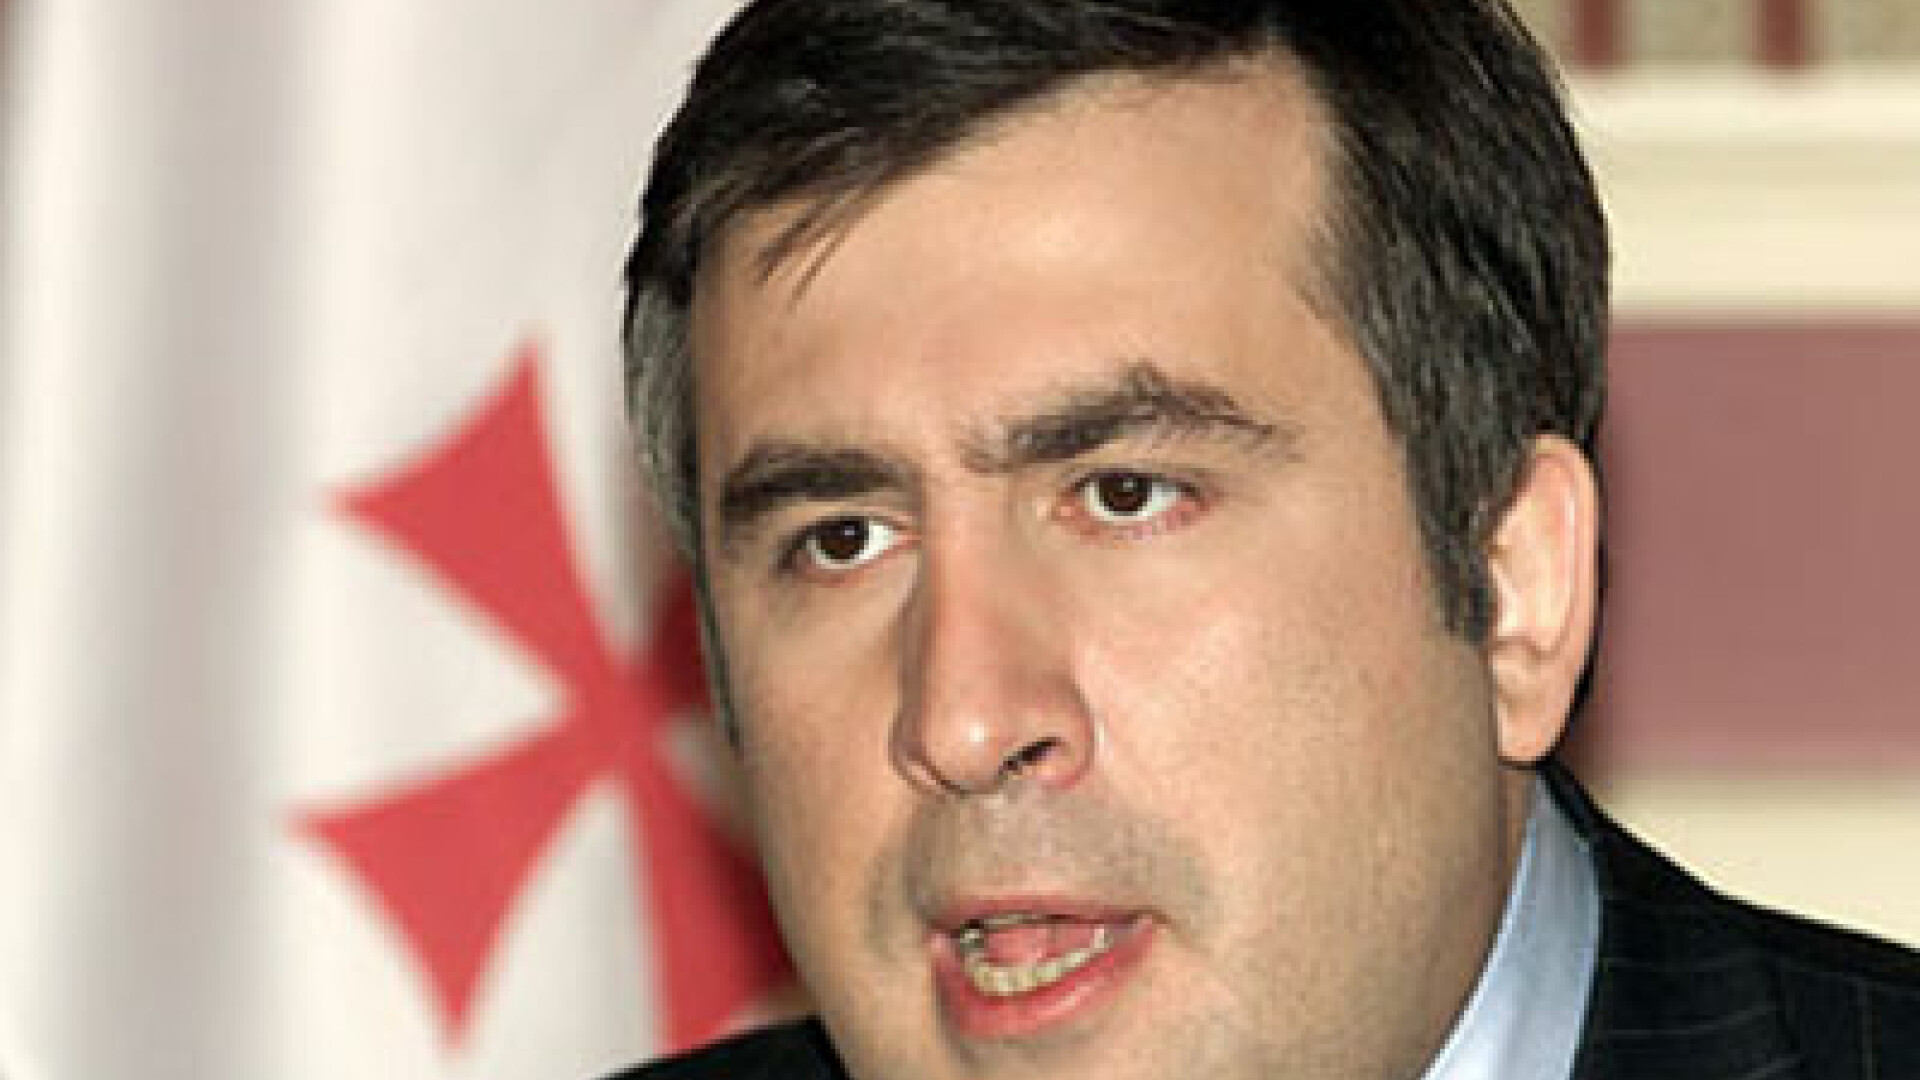 Saakasvili